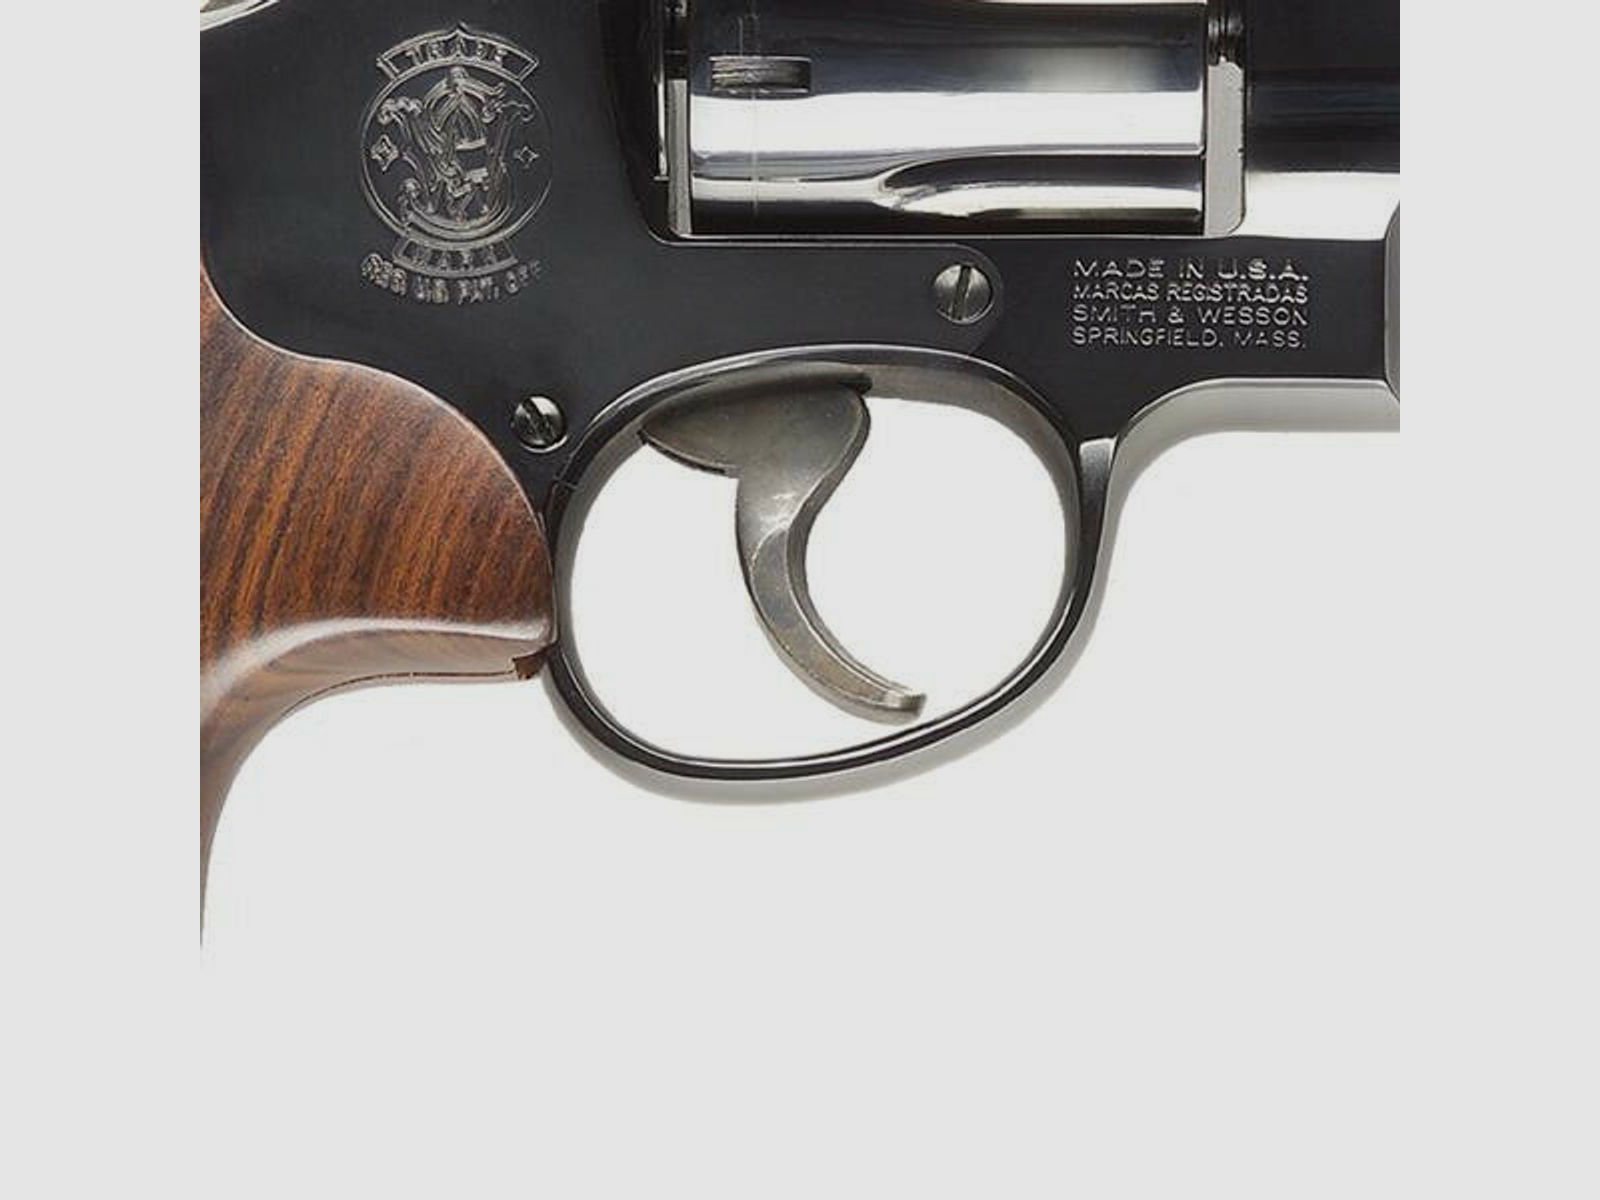 Smith & Wesson	 Mod. 29 4"